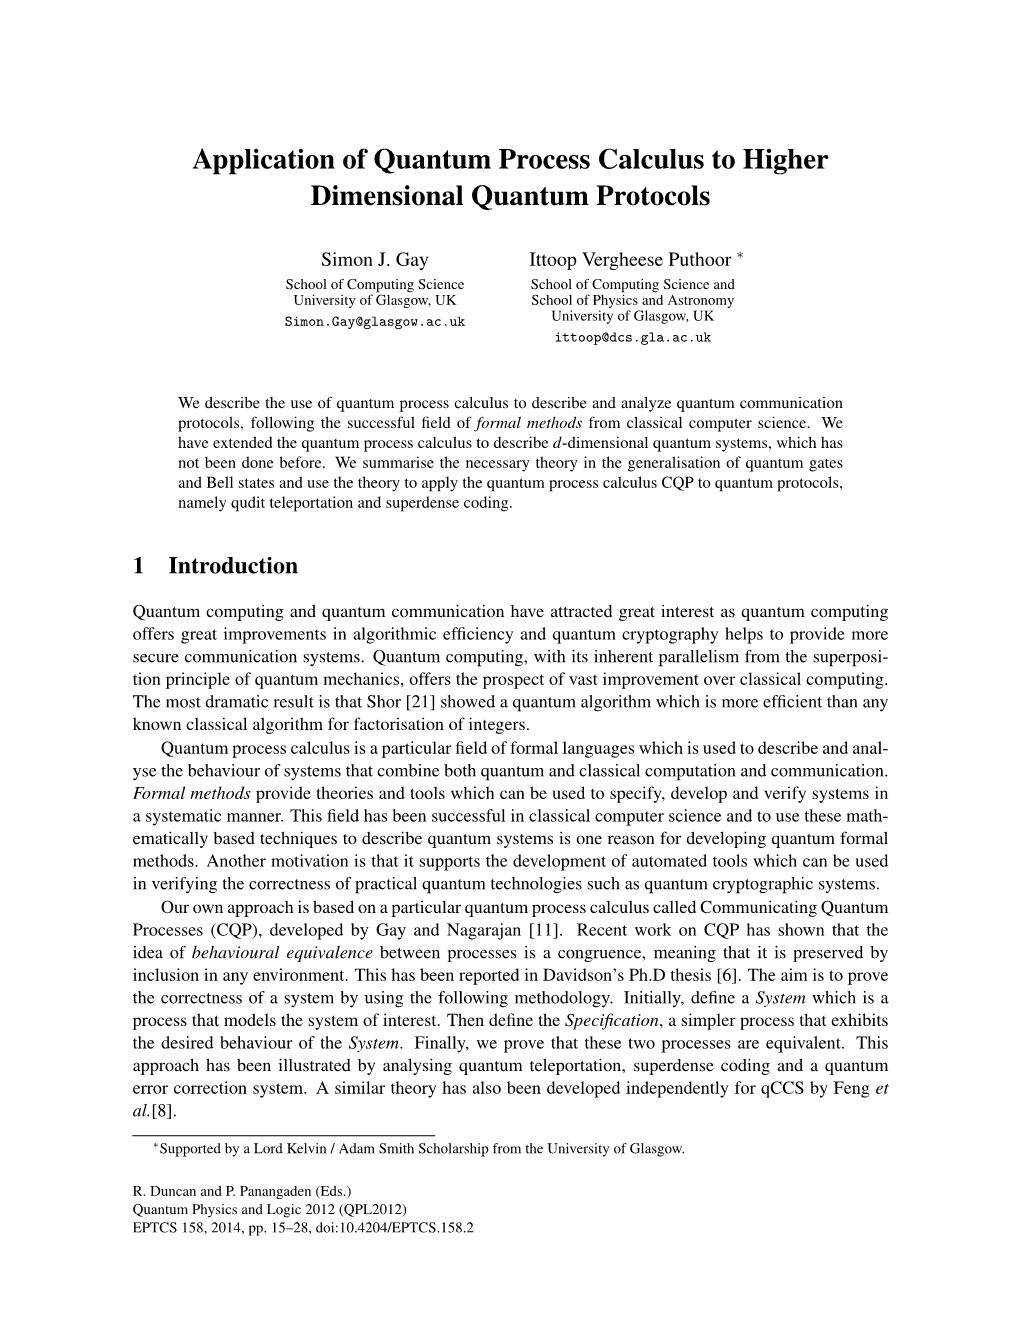 Application of Quantum Process Calculus to Higher Dimensional Quantum Protocols